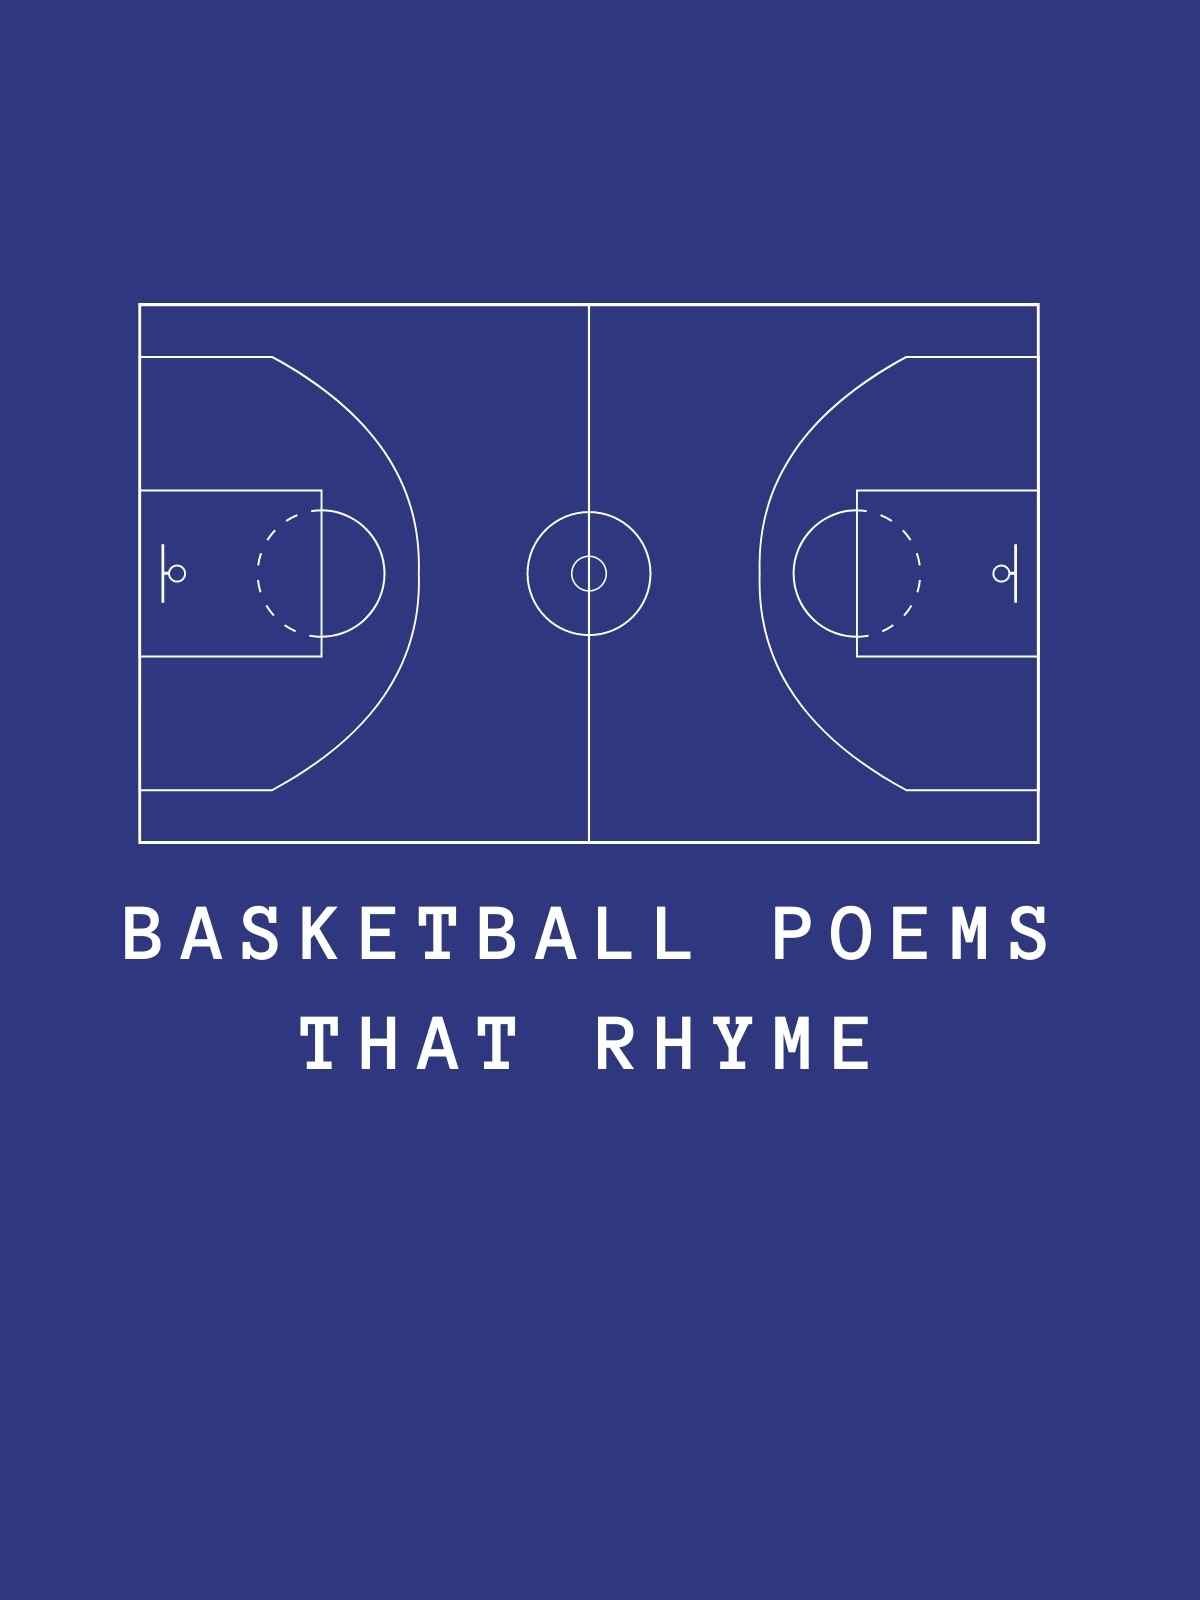 Basketball poems that rhyme